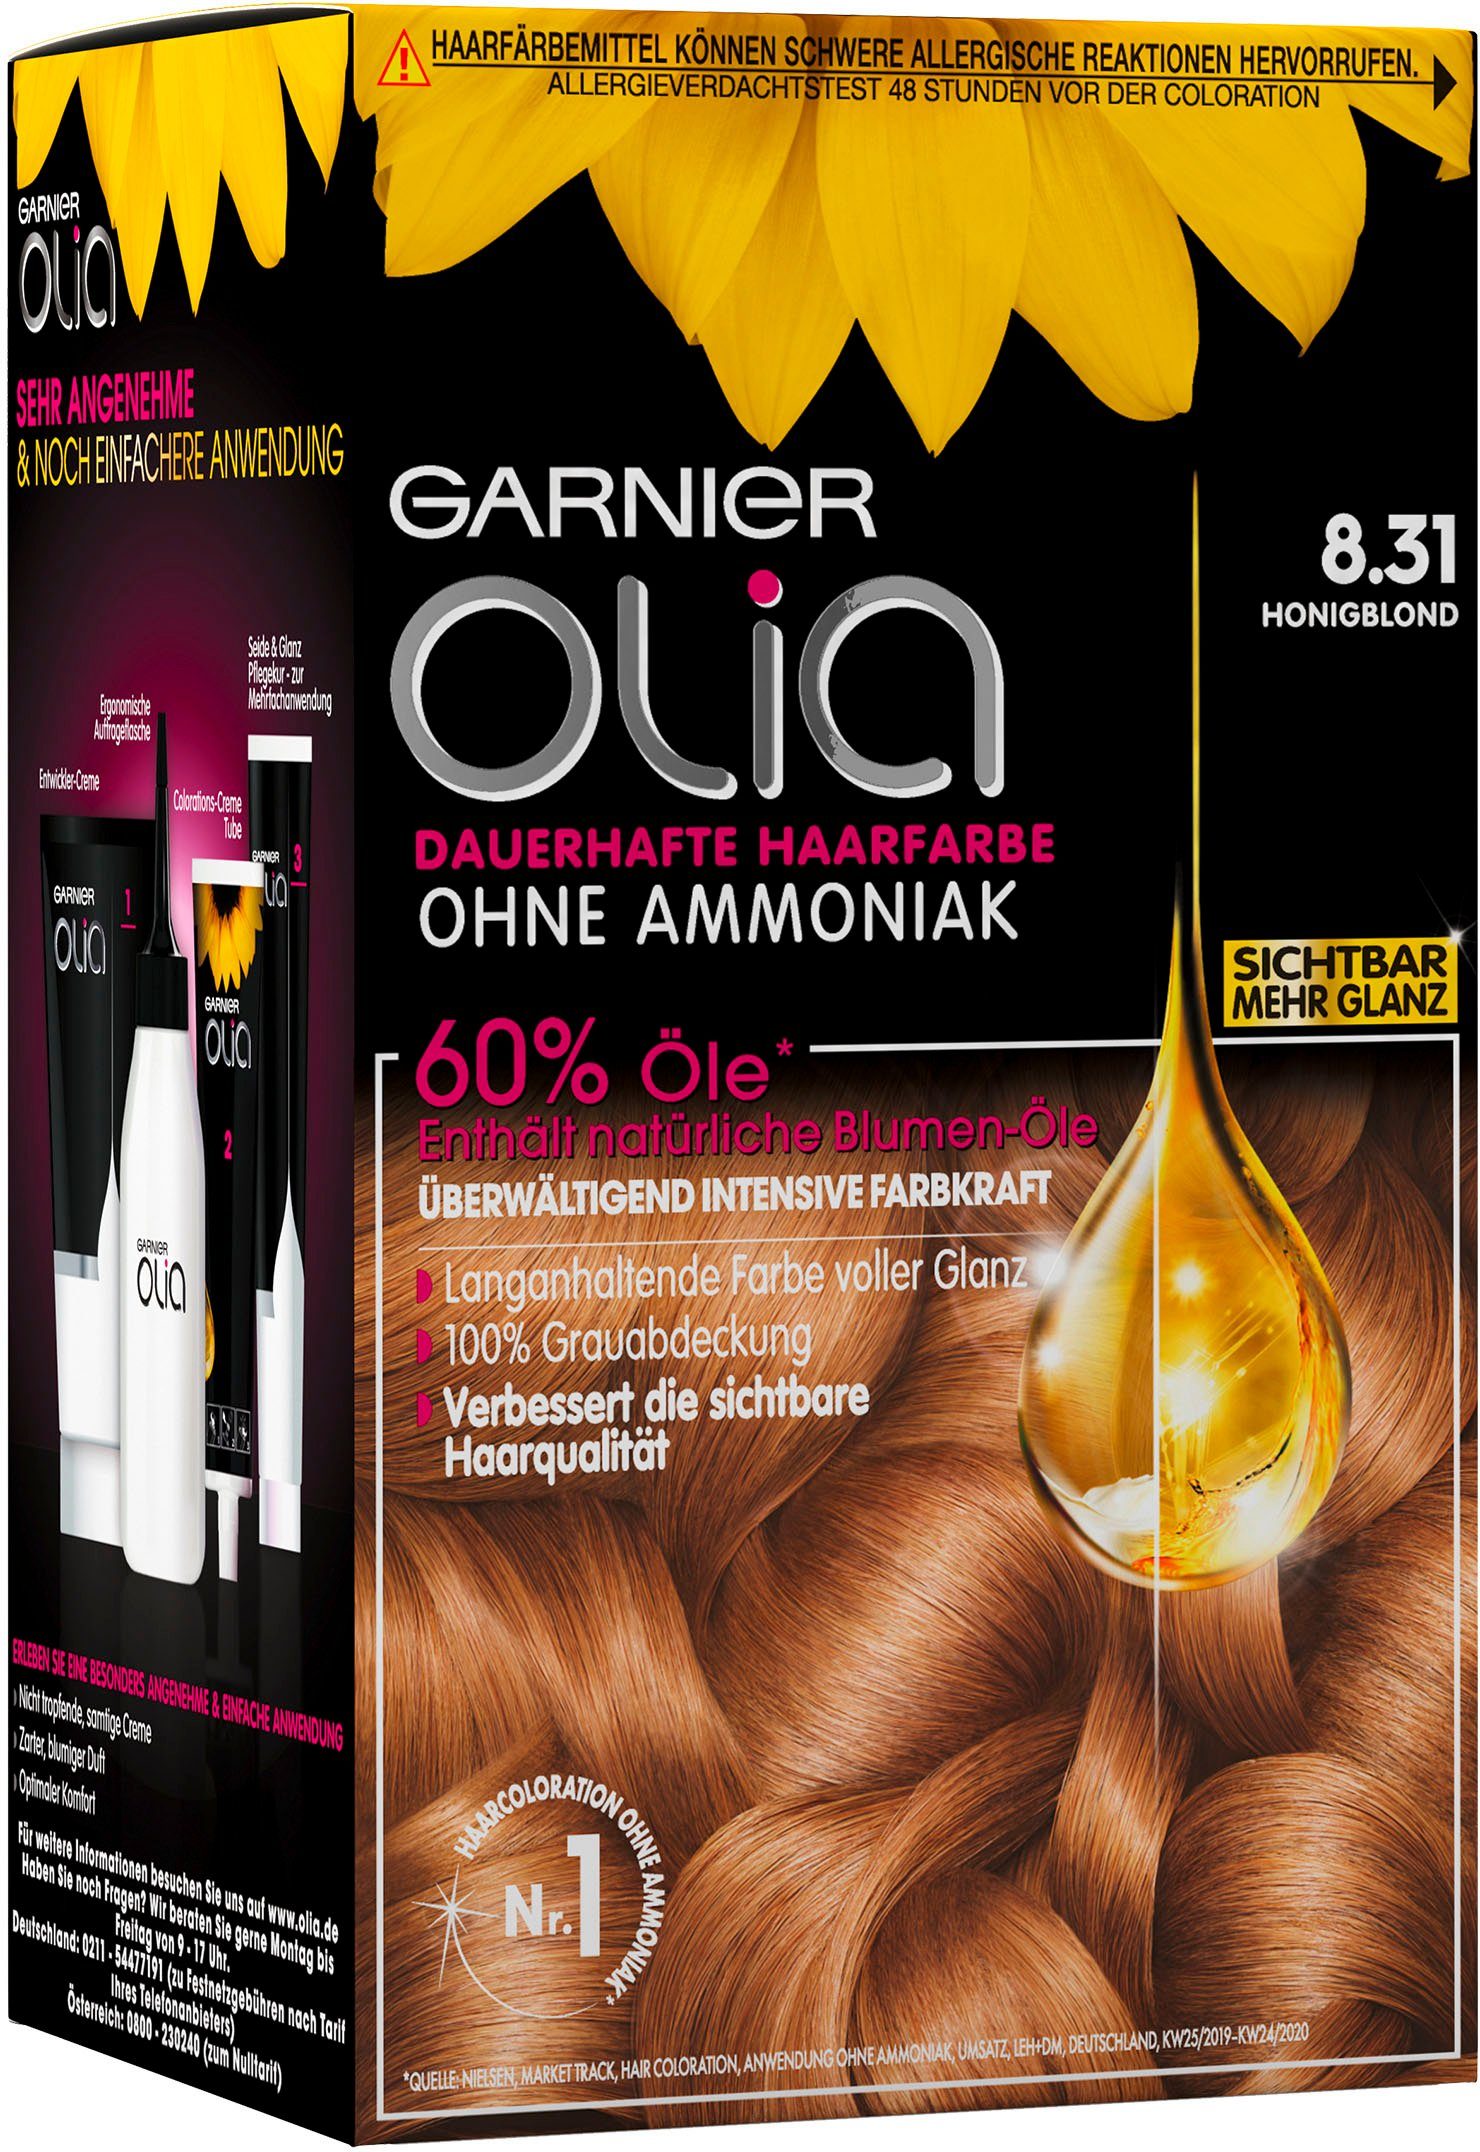 Coloration Olia dauerhafte Haarfarbe GARNIER